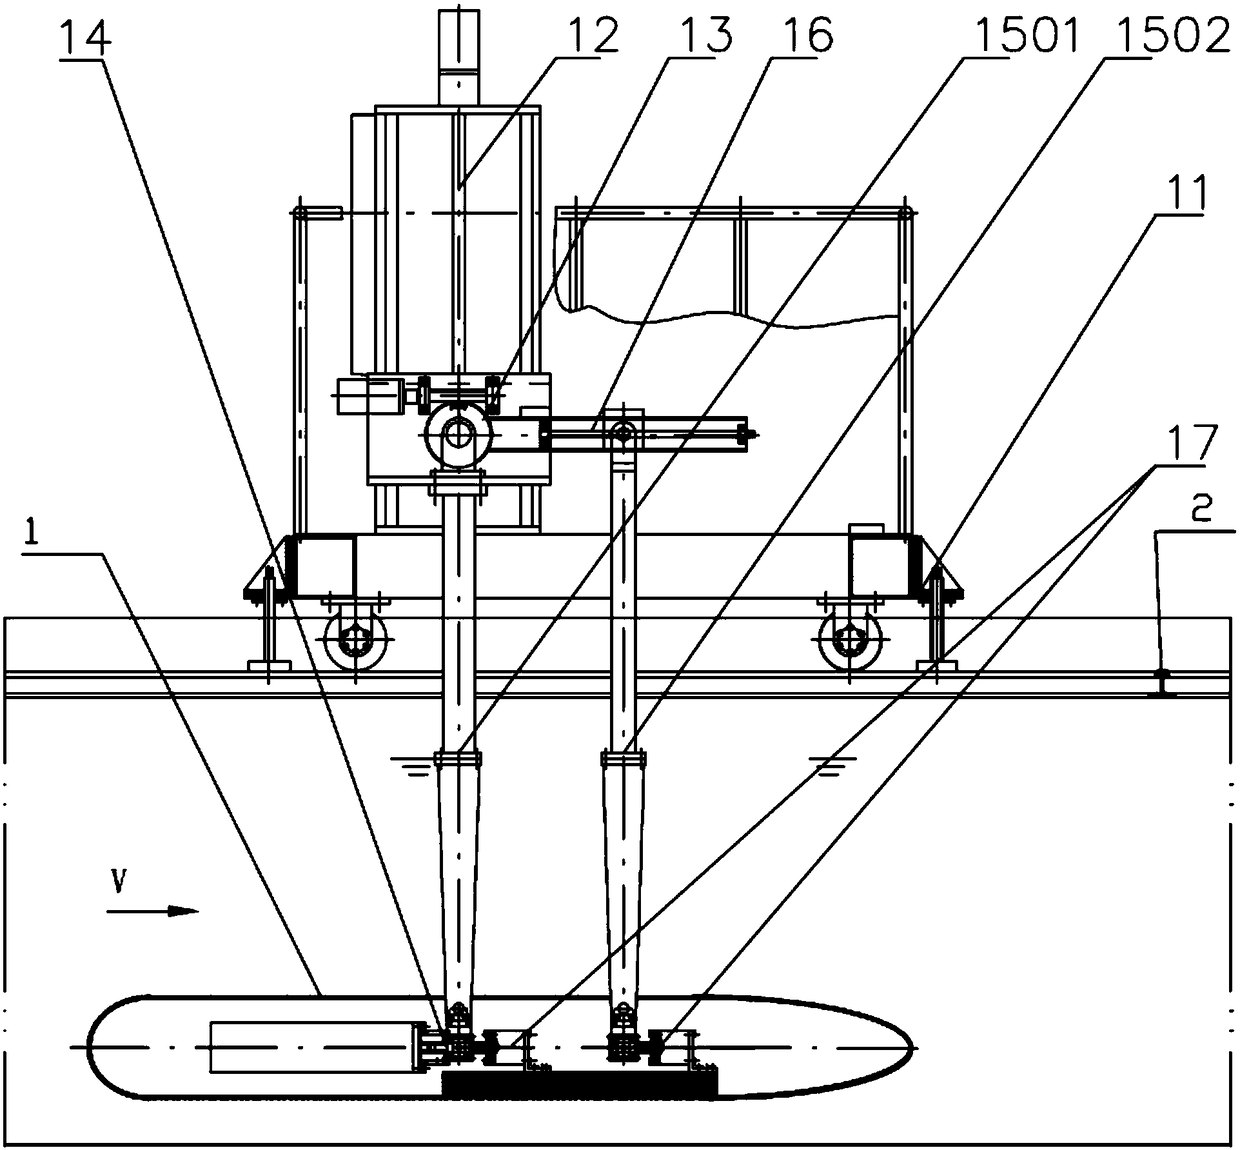 Perpendicular planar motion mechanism for hydrodynamic model test